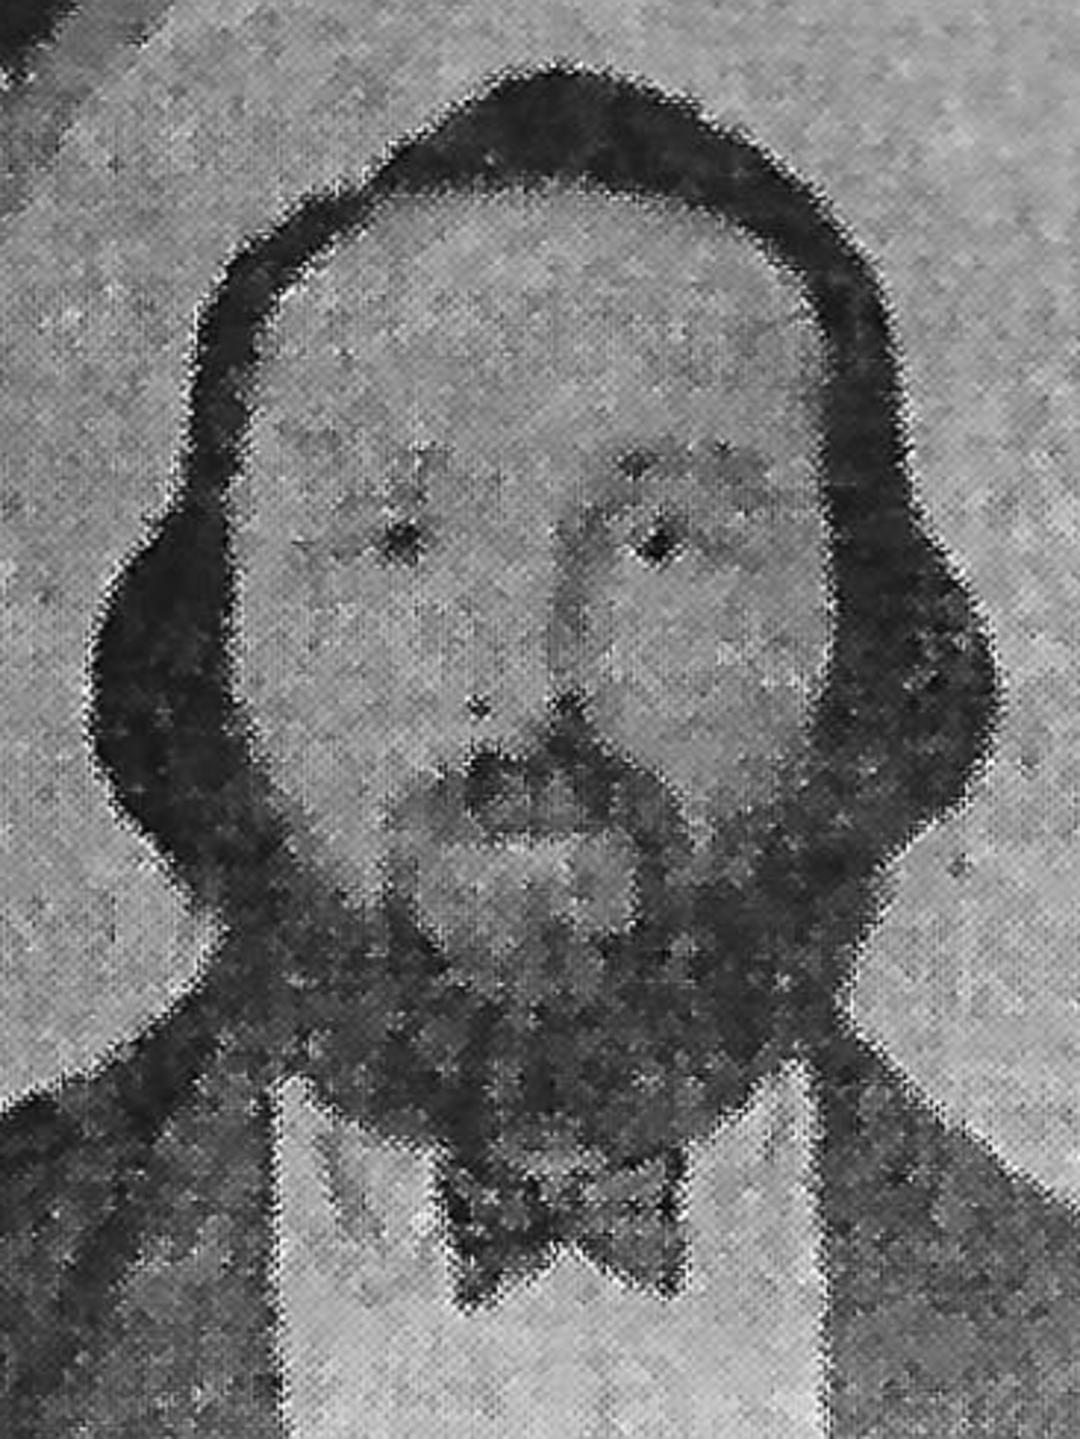 Rees Jones Williams Sr. (1819 - 1860) Profile